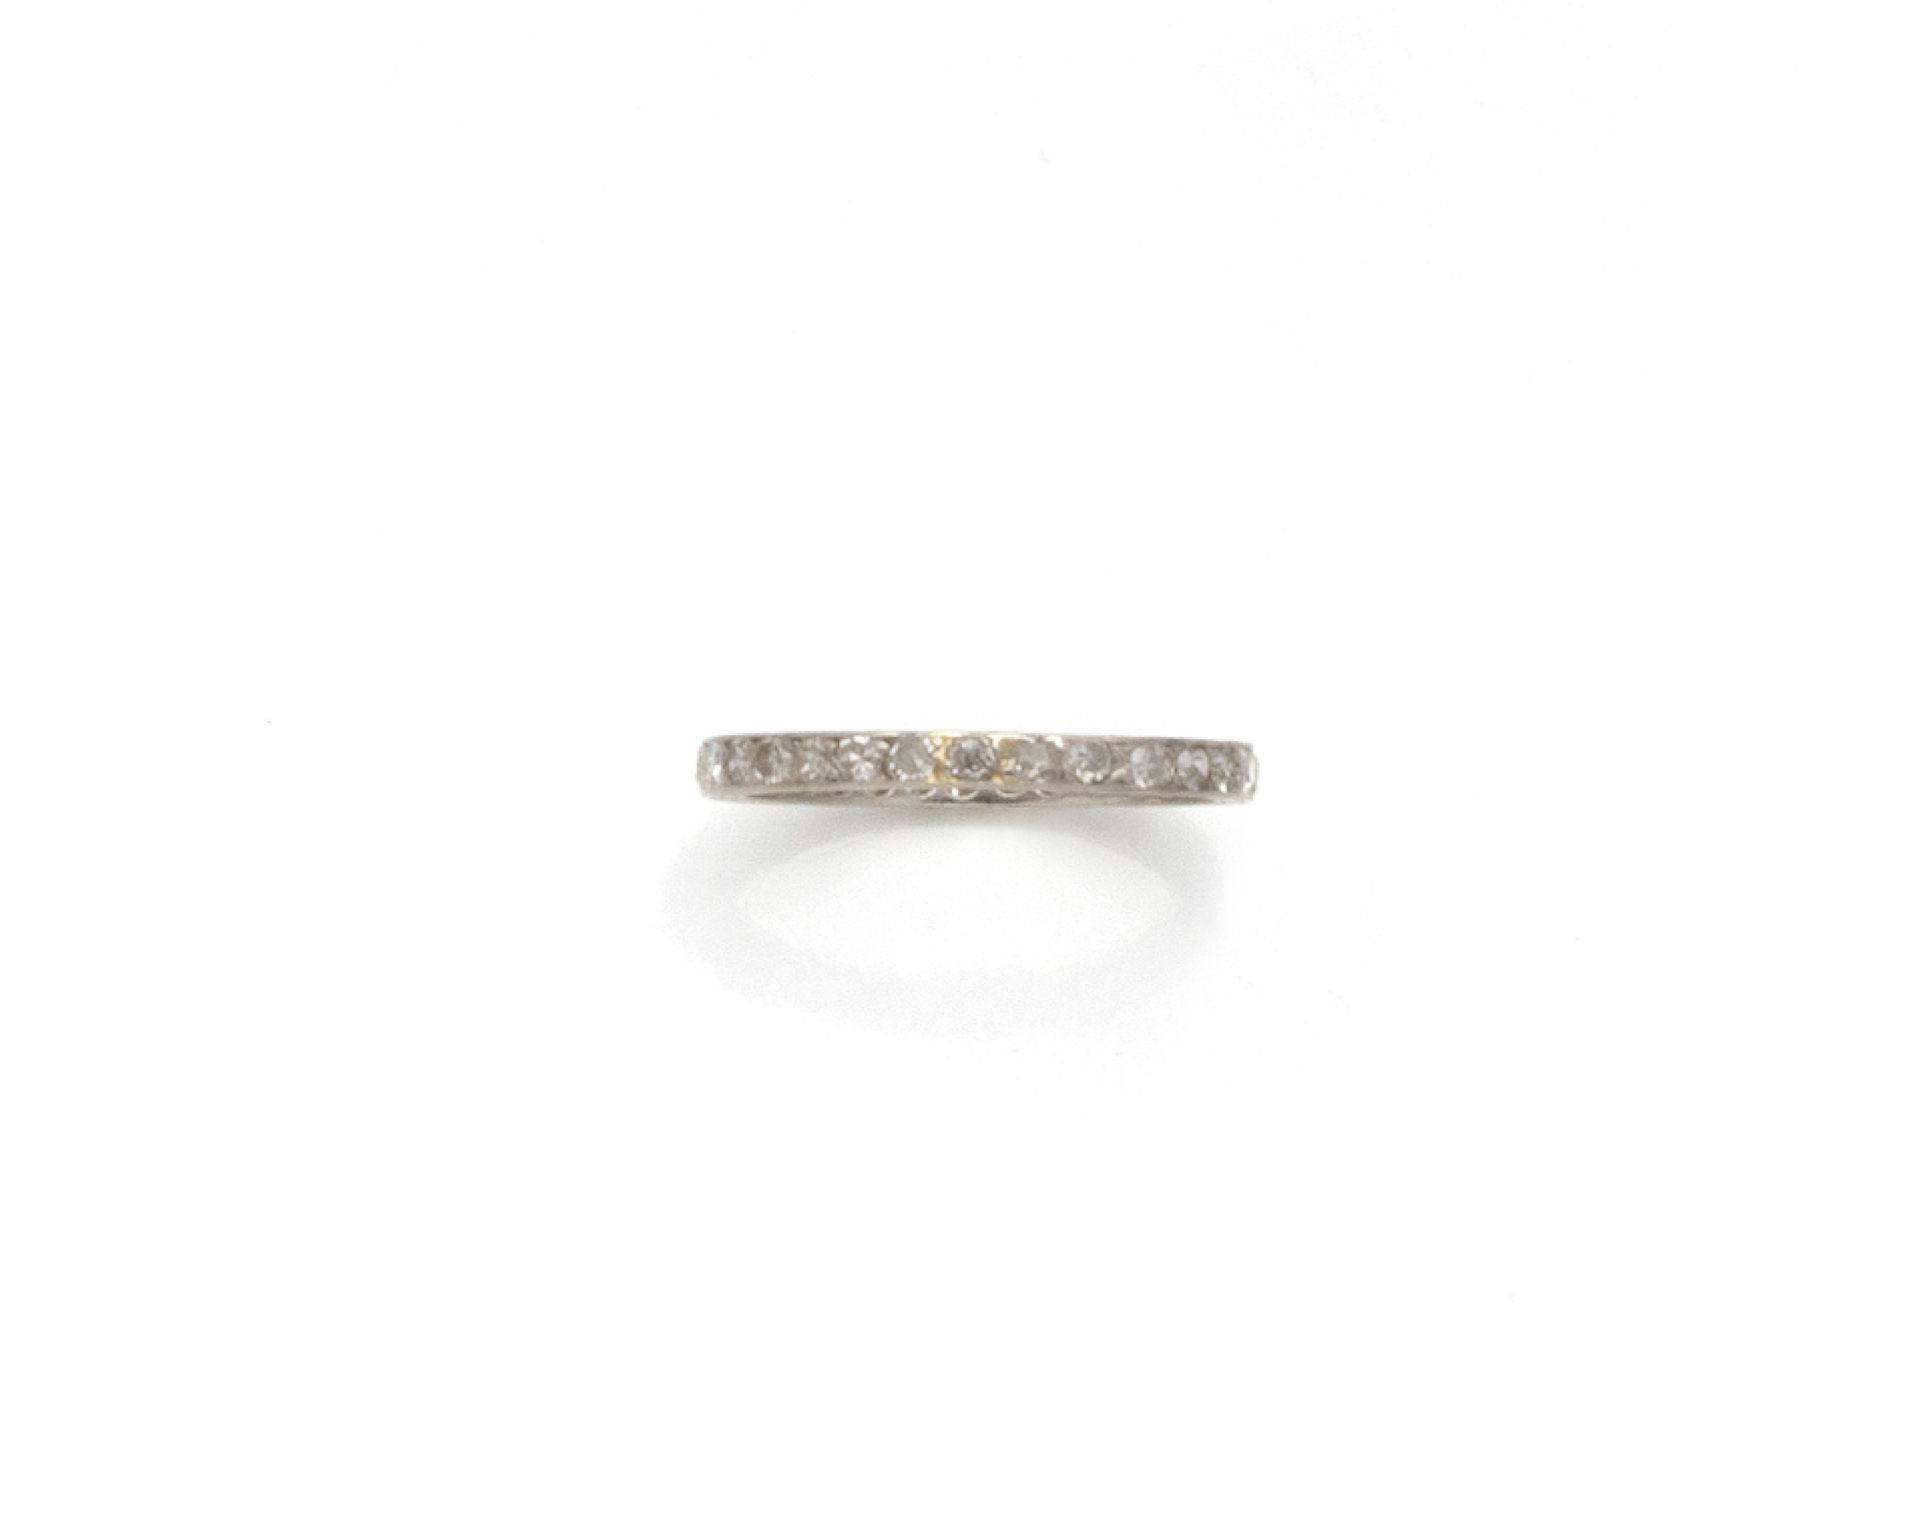 Null 美国铂金婚戒（950/1000），镶嵌29颗8/8白宝石。边缘刻有叶子的楣板。

法国的工作。标志 : F-pomme-C 

手指大小：49 - 毛&hellip;